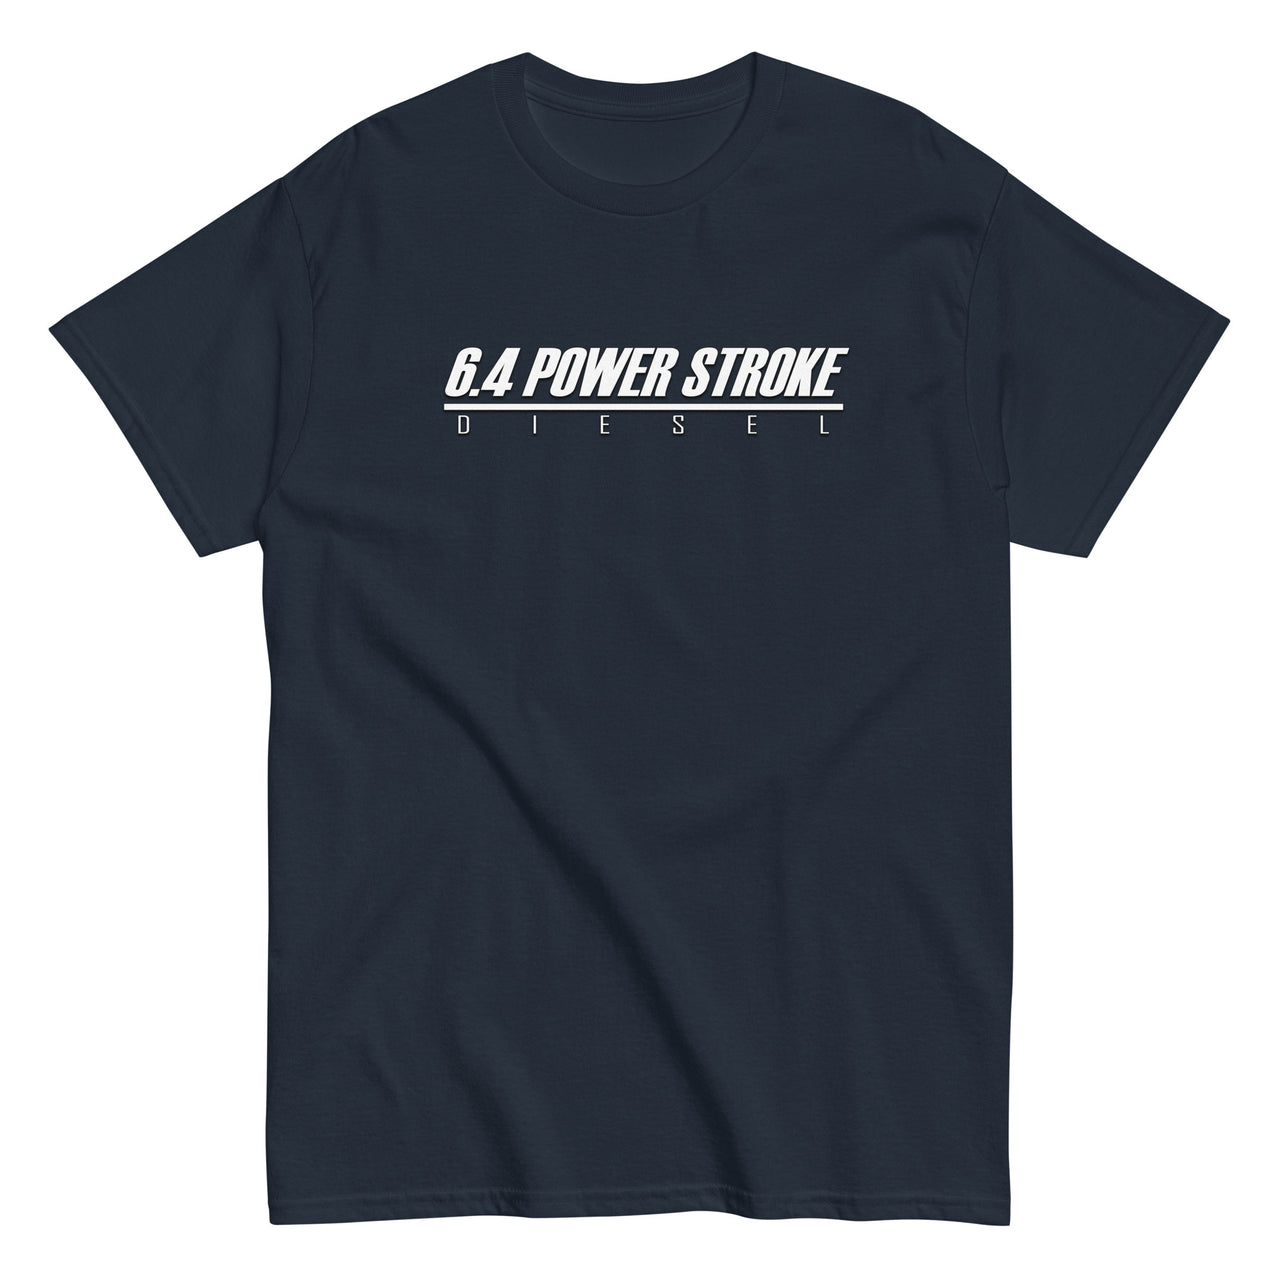 6.4 Power Stroke Trucks t-shirt in navy